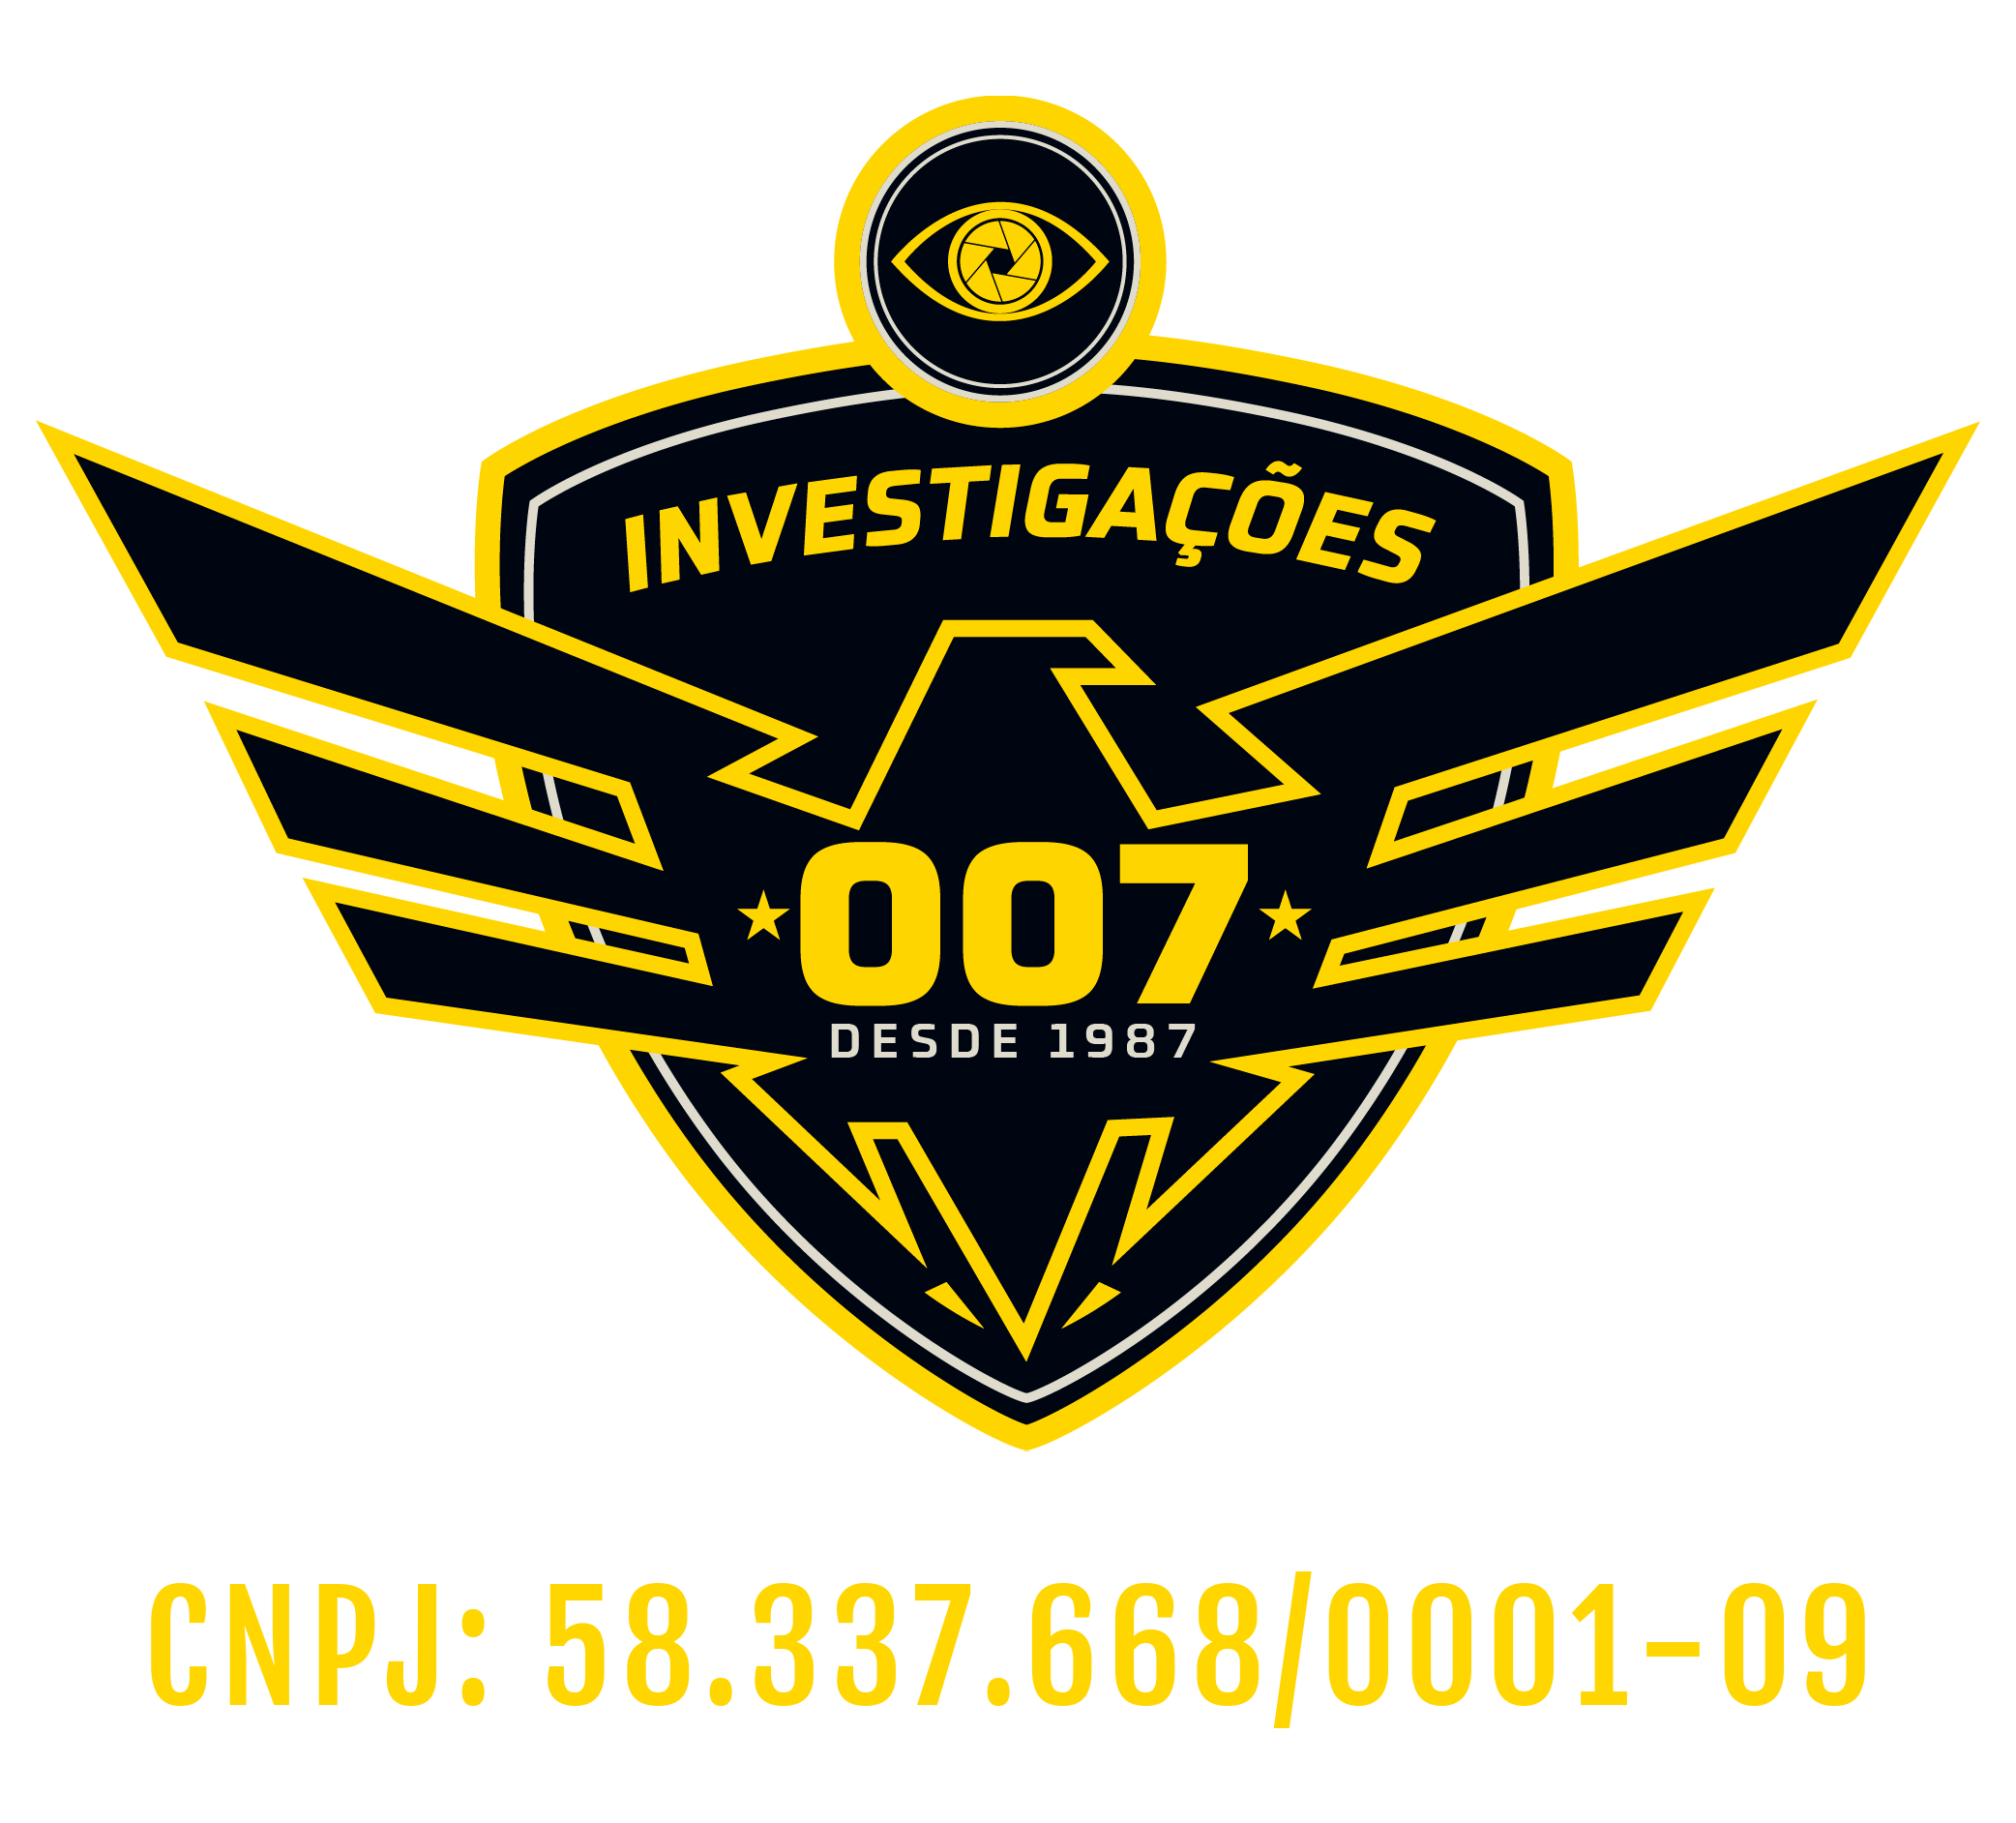 CNPJ: 58.337.668/0001-09